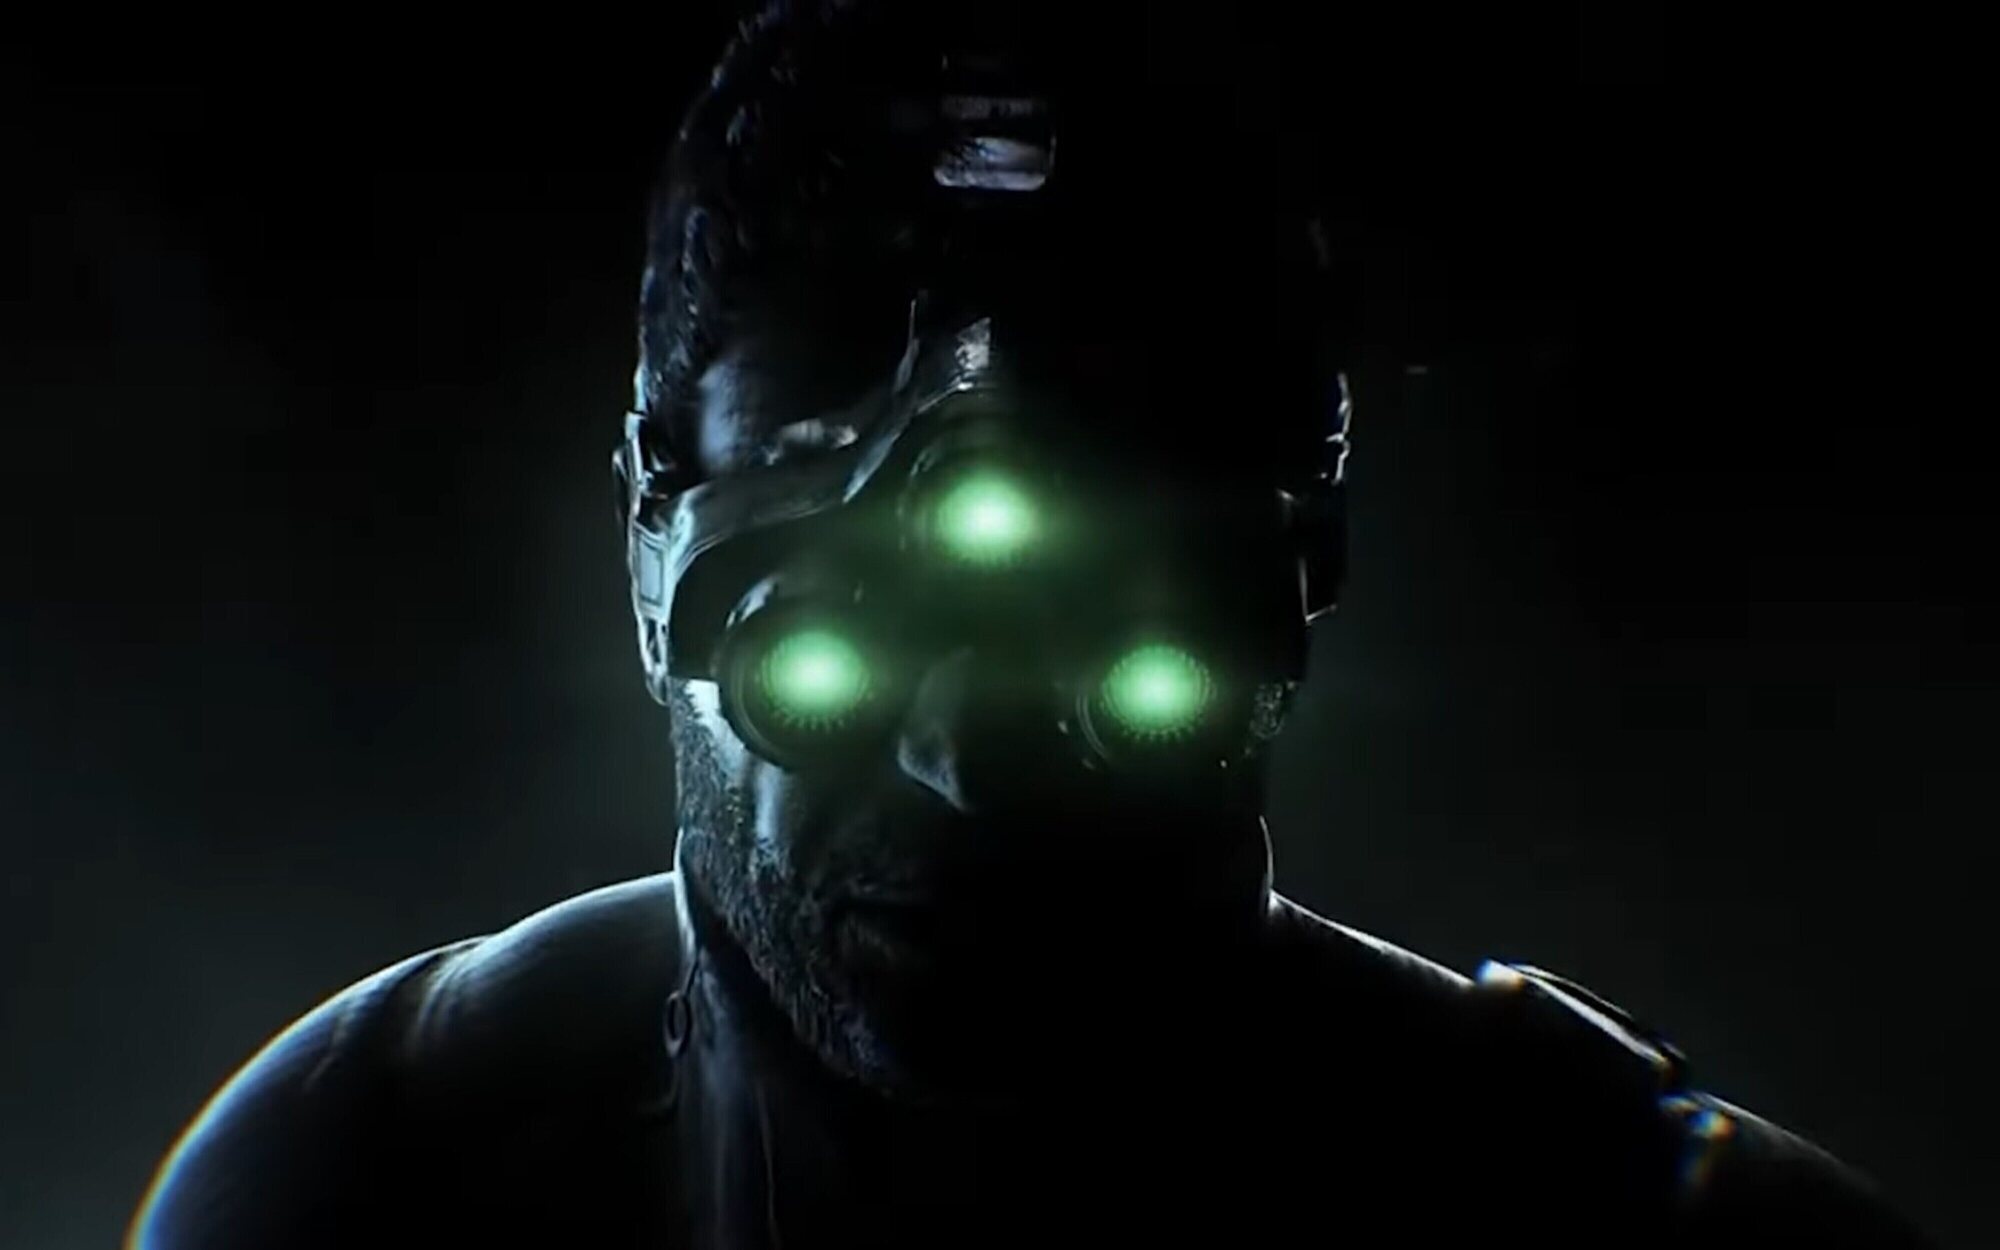 Ubisoft revela más detalles de 'Splinter Cell Remake', que retocará la historia original